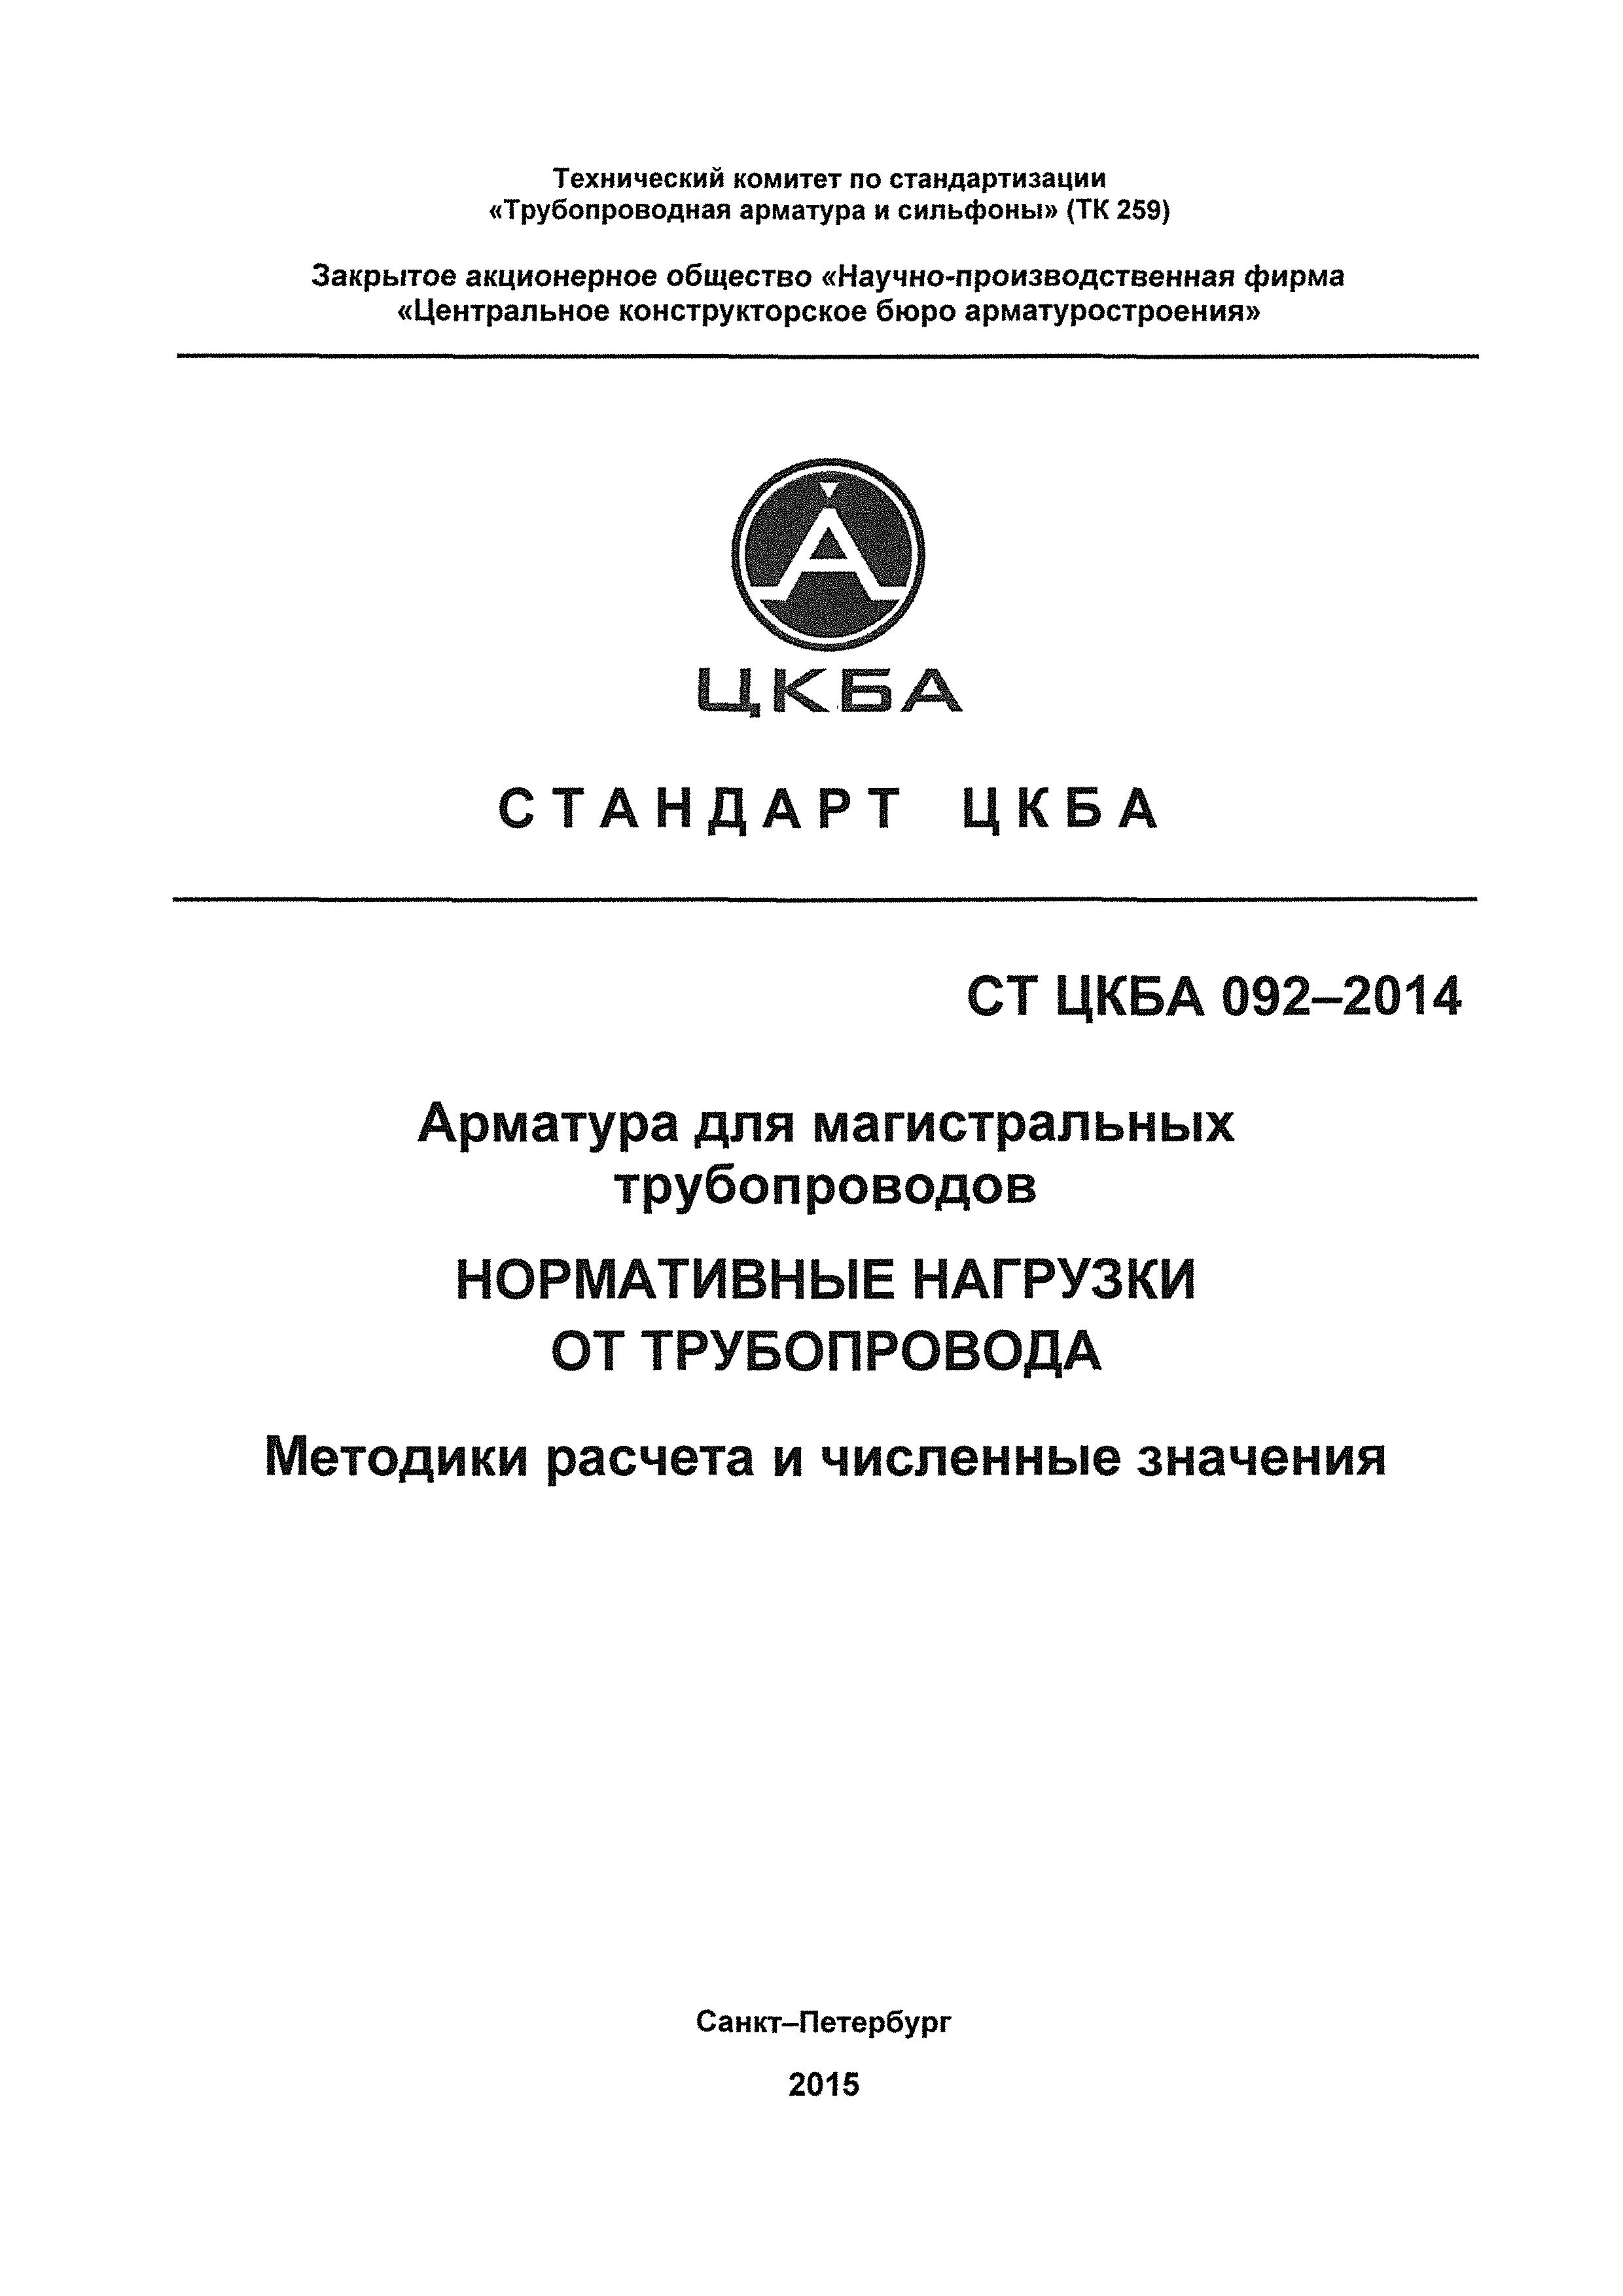 СТ ЦКБА 092-2014